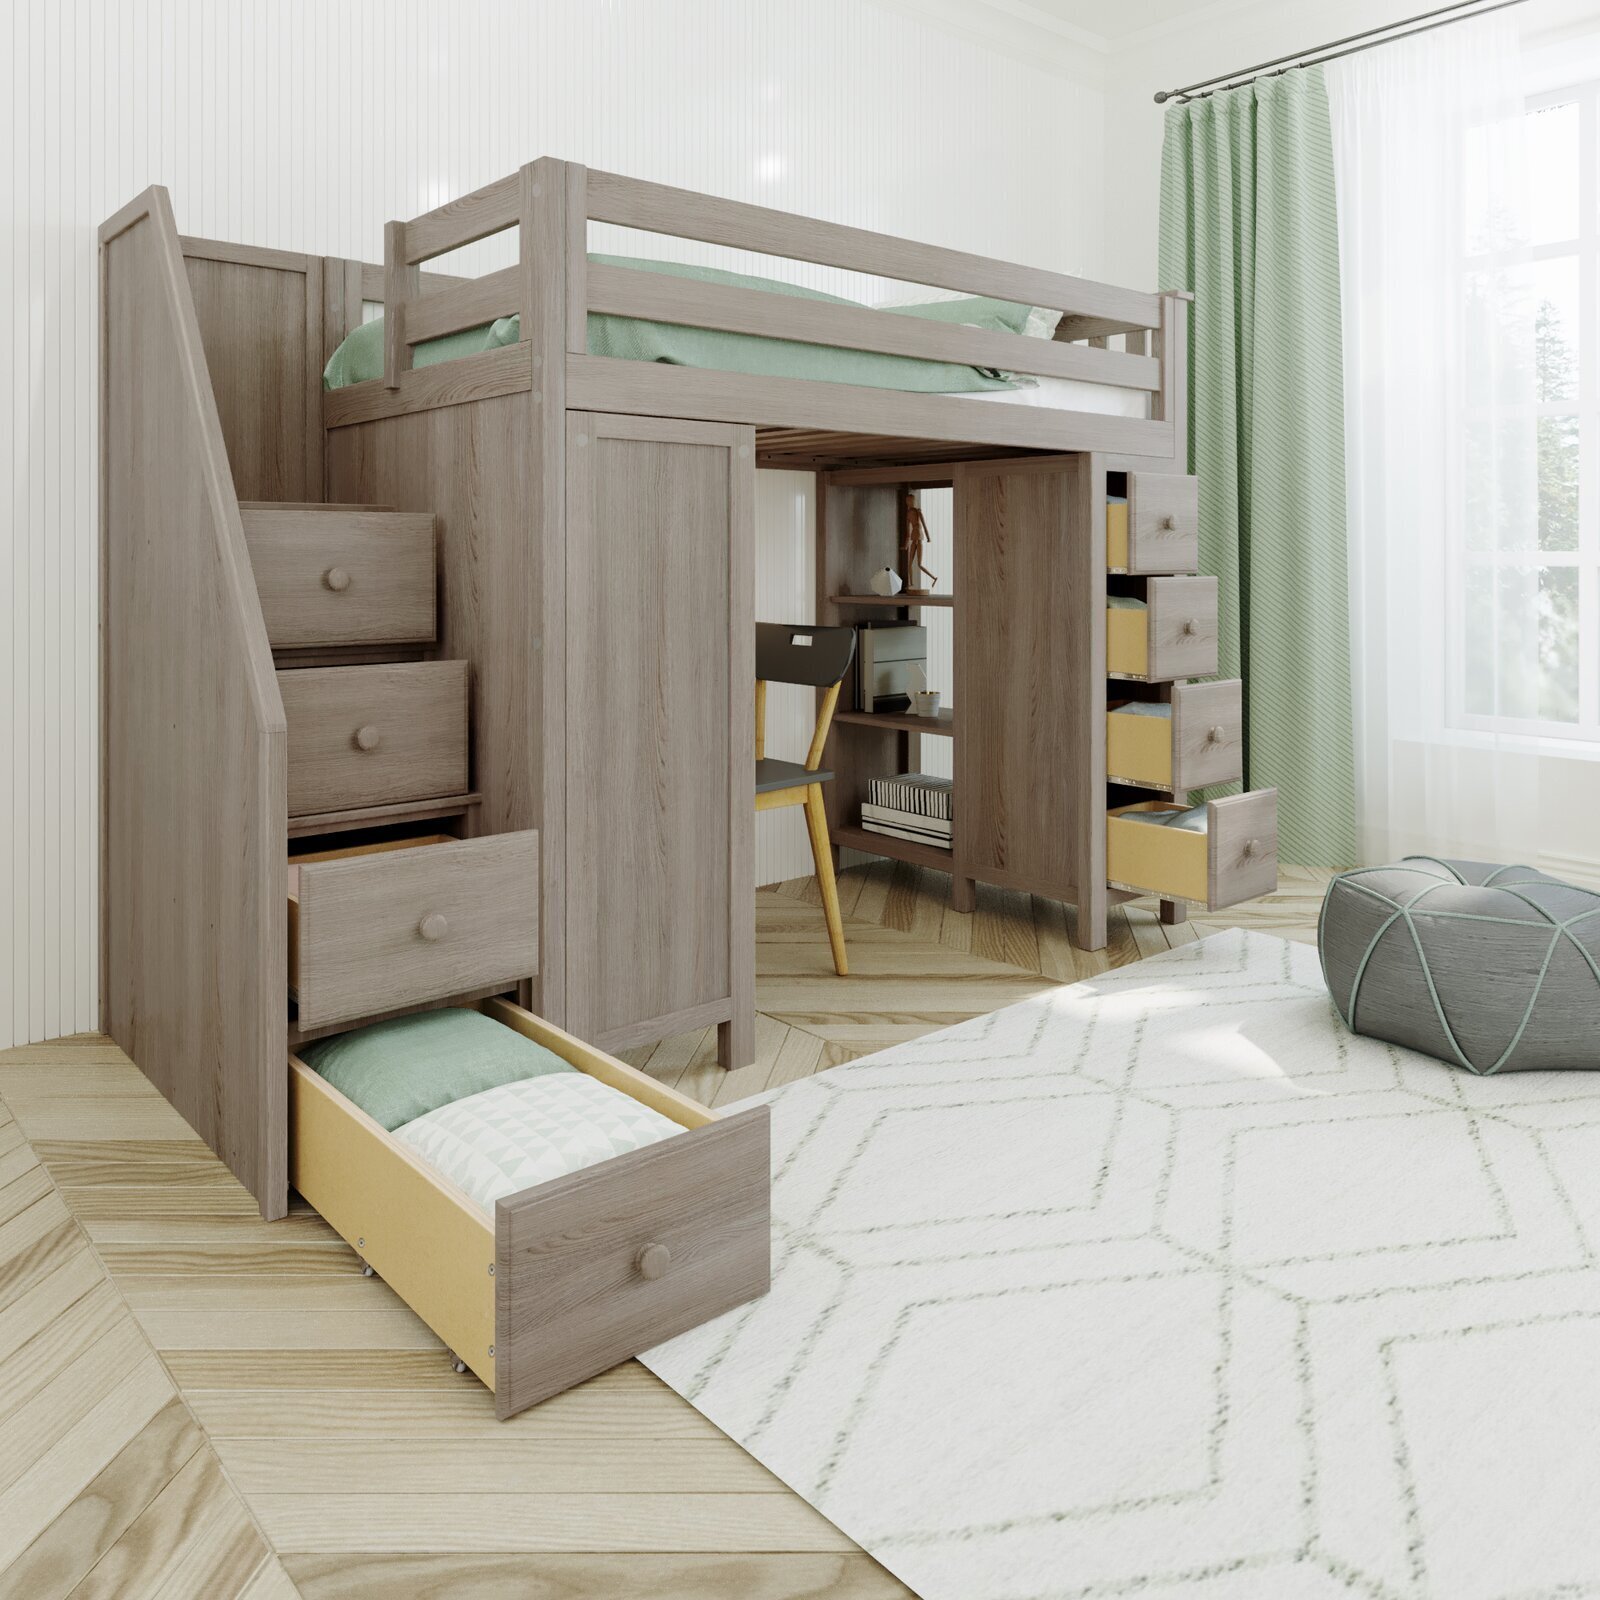 Cozy loft bed with desk